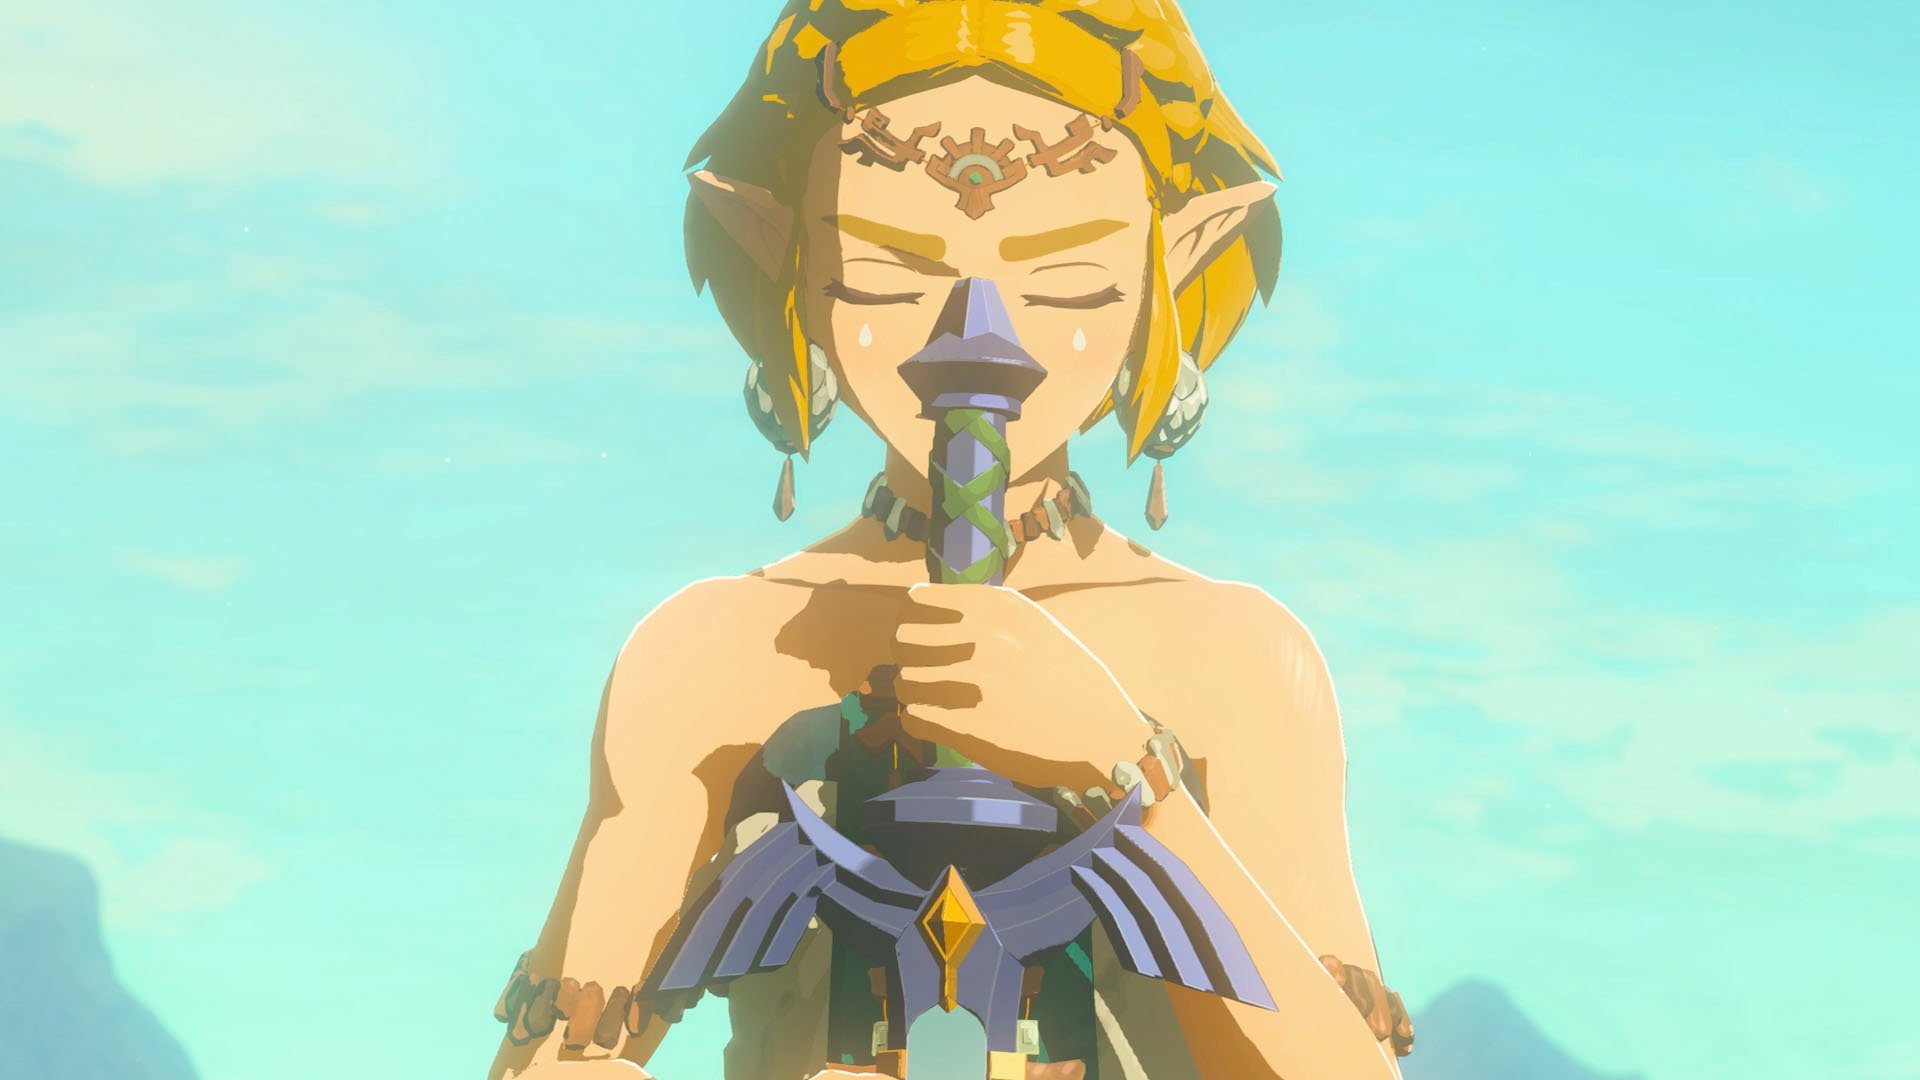 Switch the Kingdom Tears of The Zelda: Legend of Nintendo